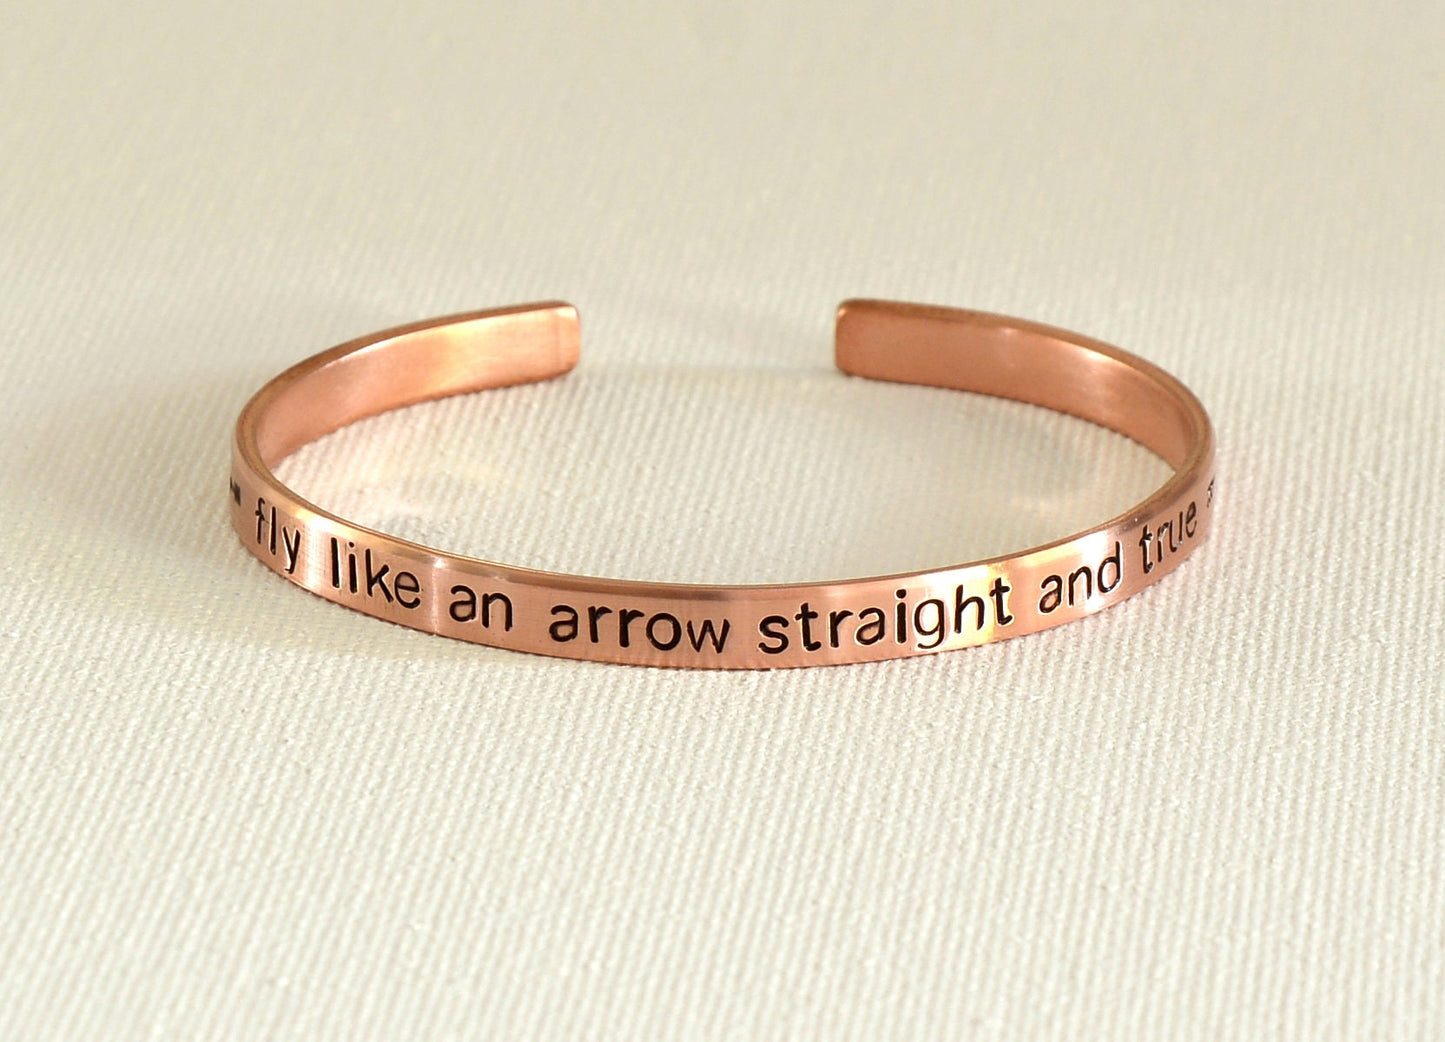 Fly like an arrow straight and true copper bracelet